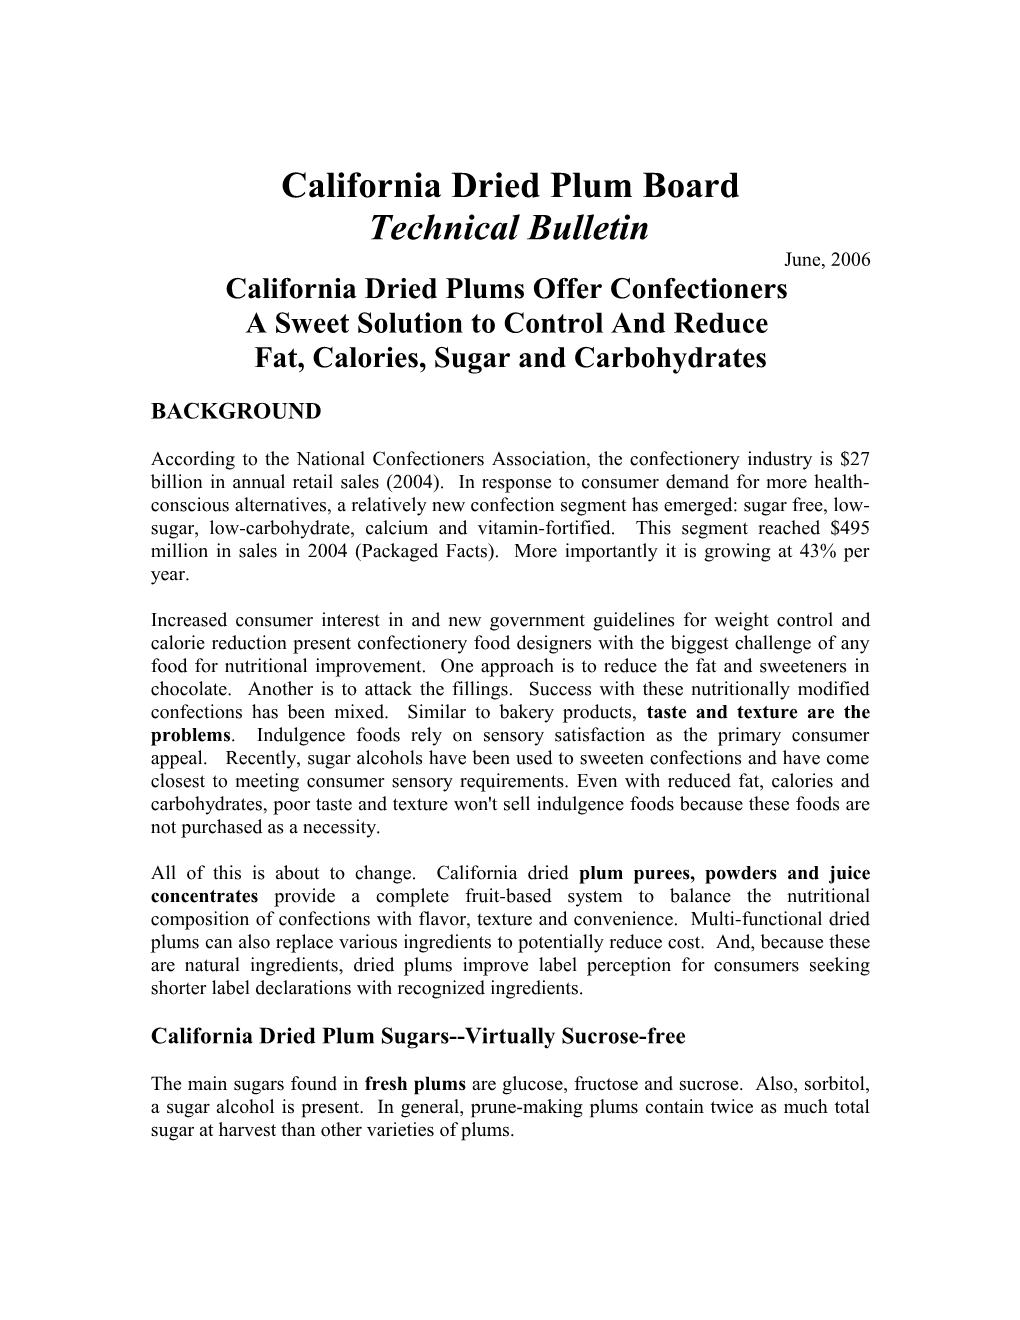 California Dried Plum Board s1